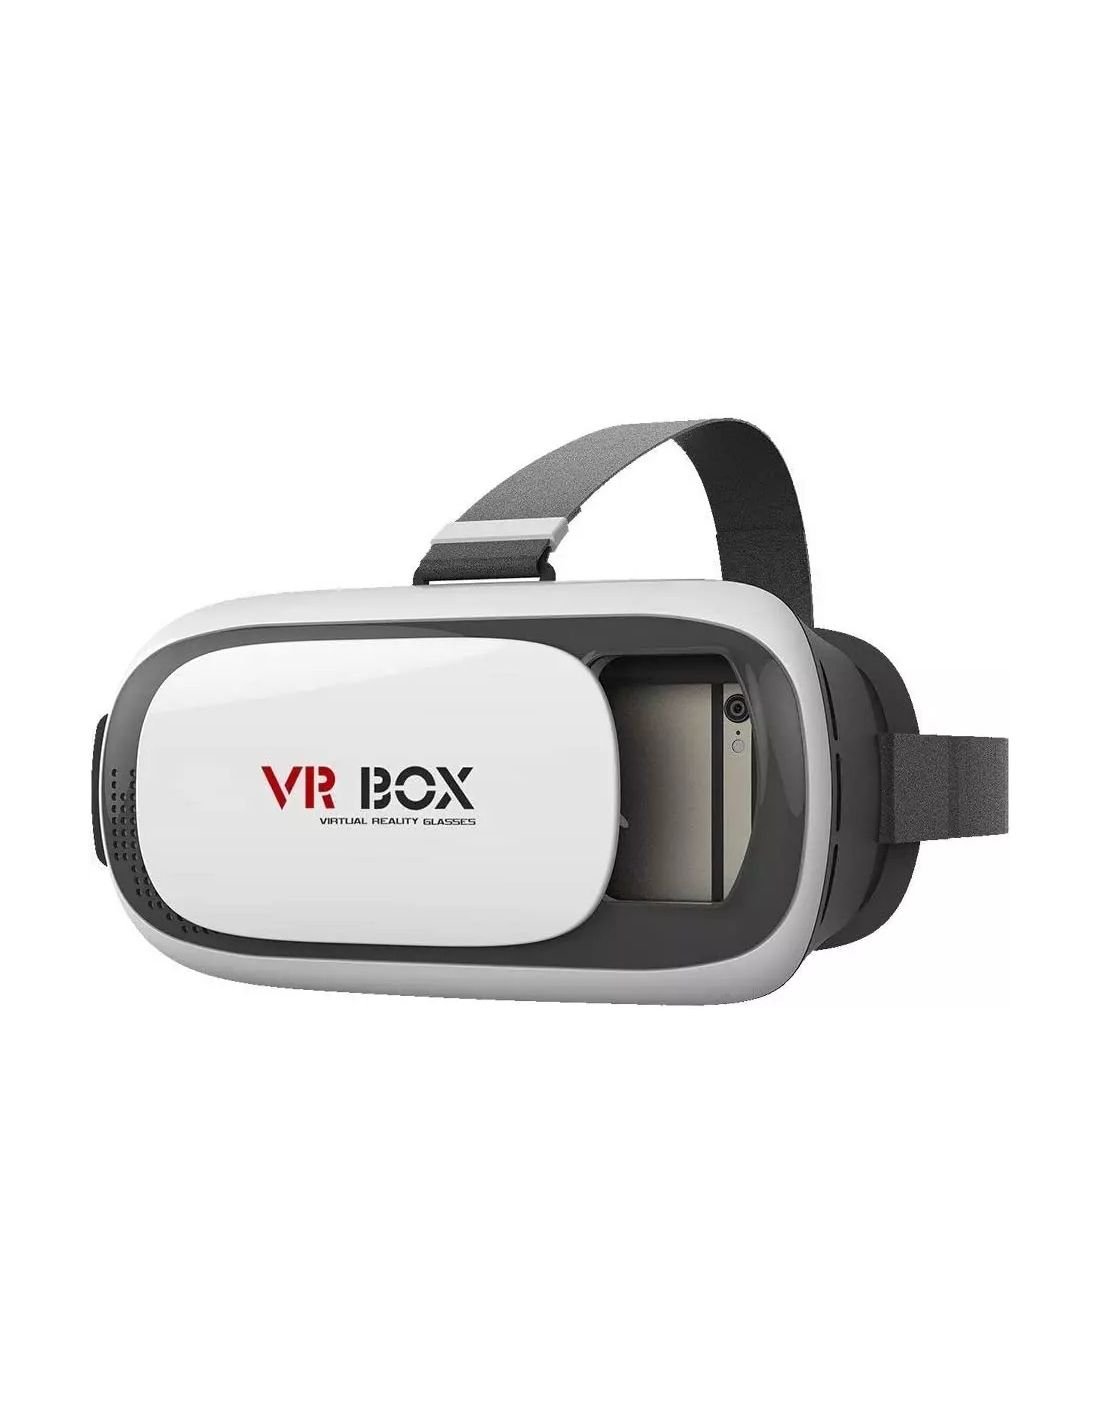 Gafas realidad virtual PC (2024)